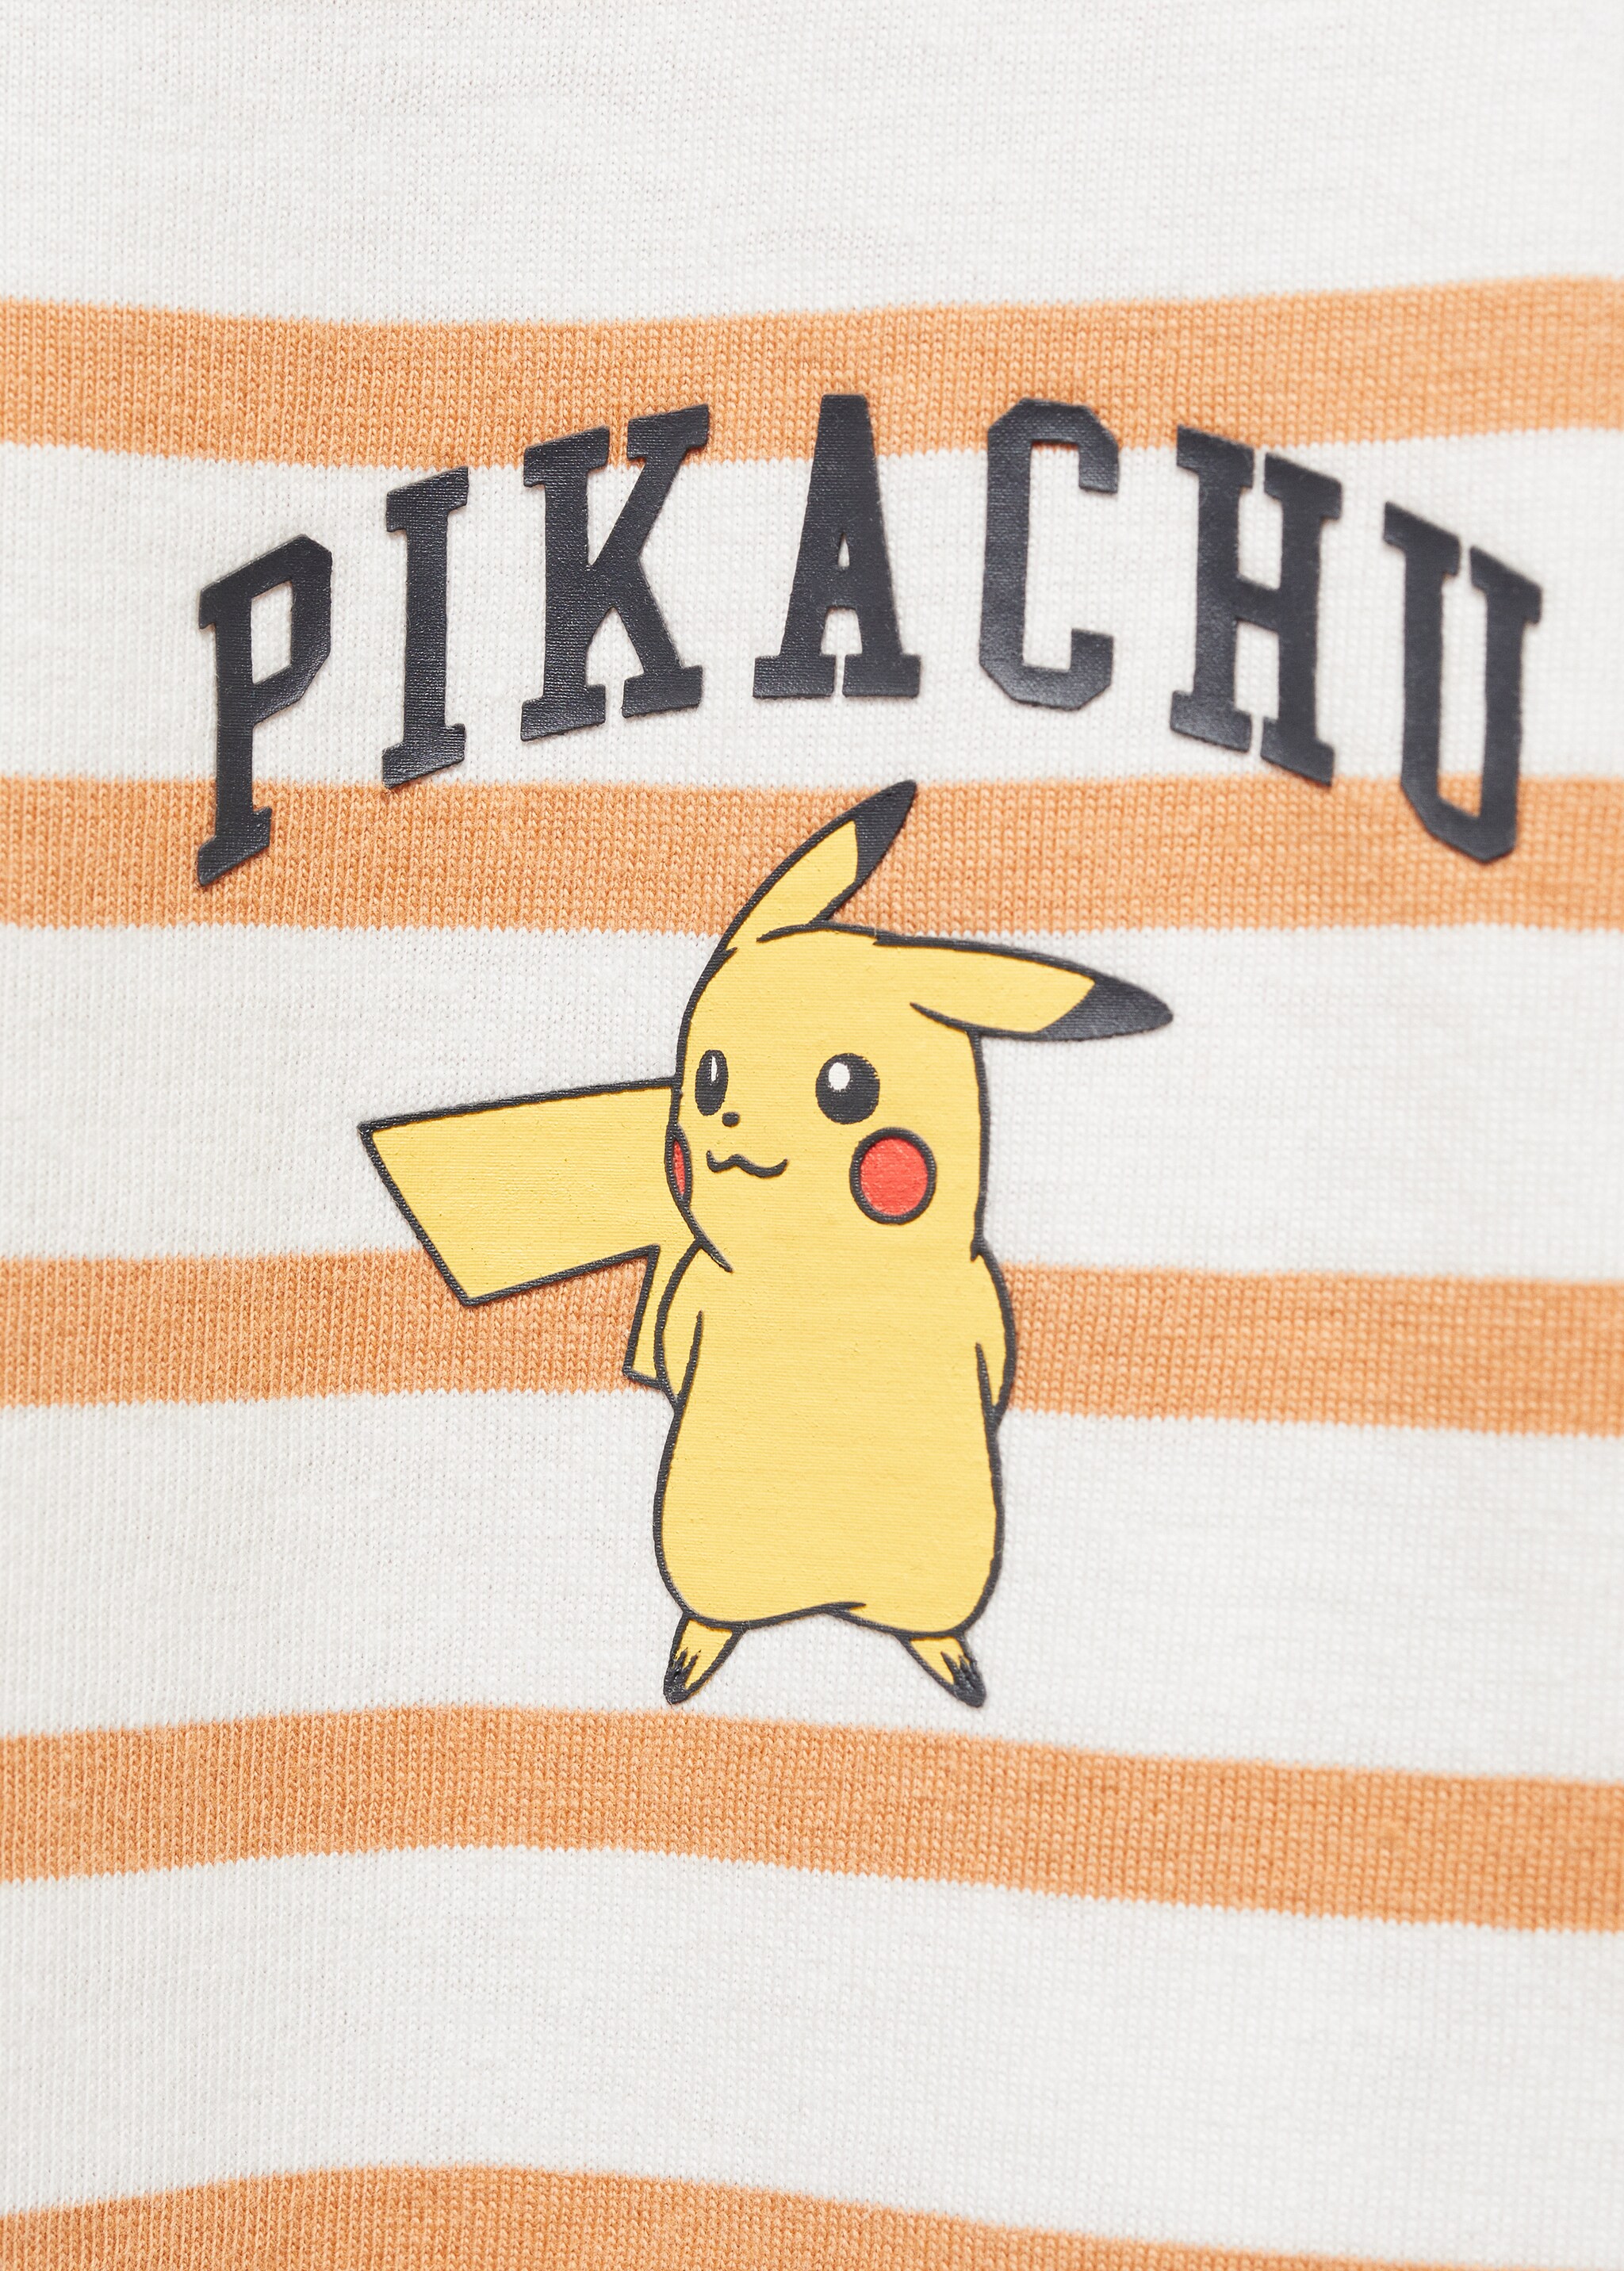 Pikachu Pokemon T-shirt - Details of the article 8